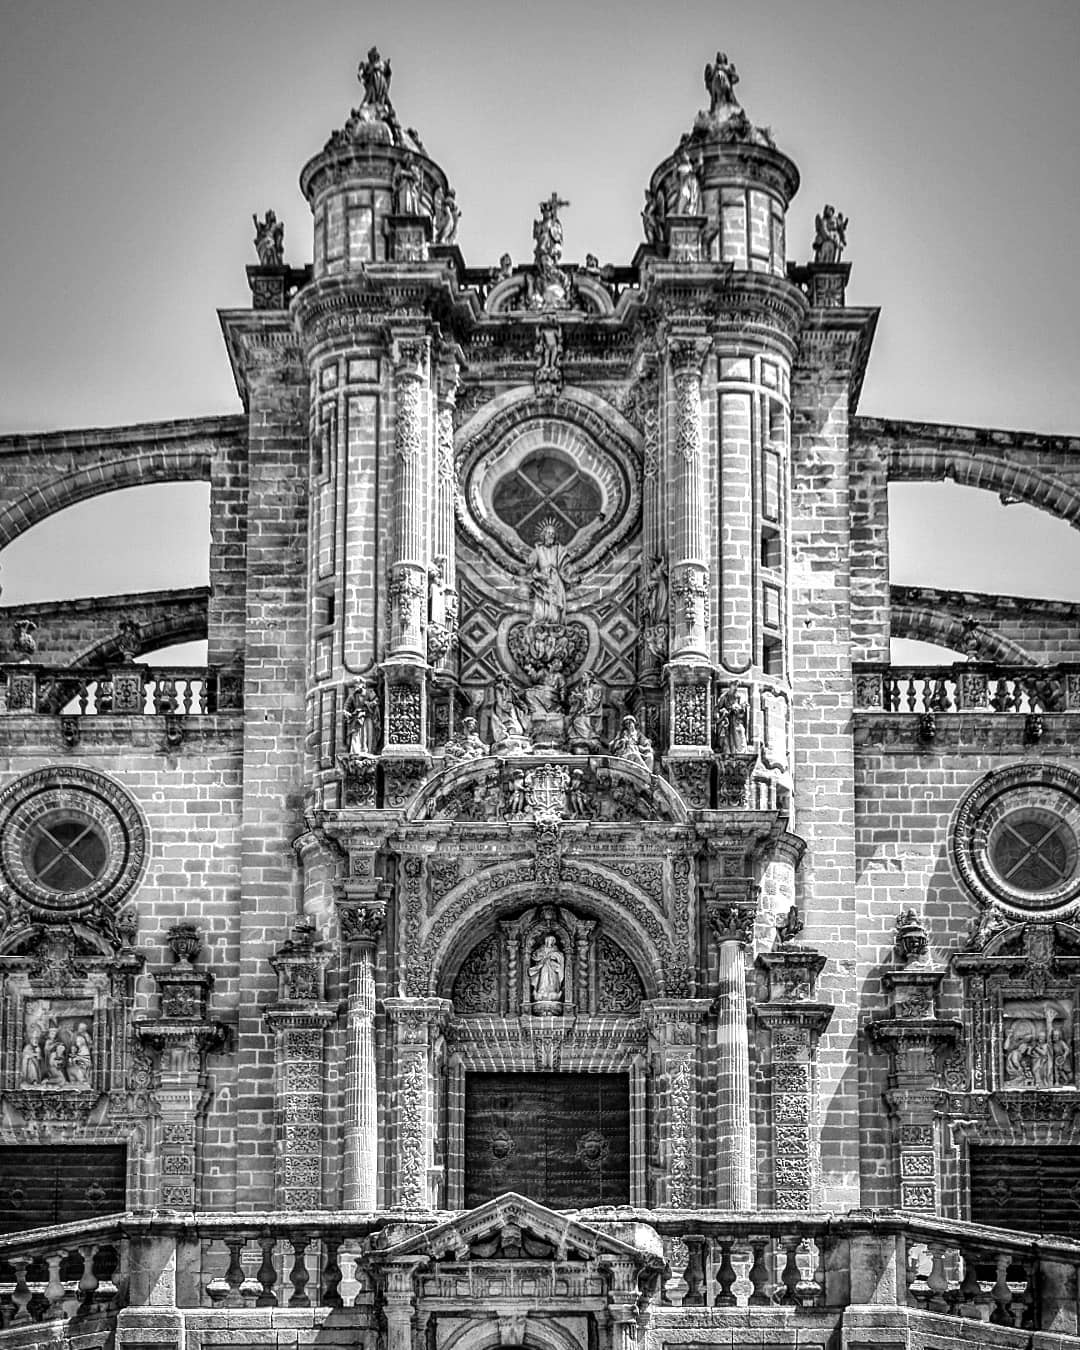 Catedral de Jerez de La Frontera #jerezdelafrontera #travel #allblackcommunity #spain #nikontop #arquitectura #culture #architecture #blackandwhite #bw #travelabout #nikoneurope #bnw_planet #blackandwhite #monochrome #monochromatic #bnw_vision #bwphotography #bwphoto #bw_lover #bw_crew #pretoebranco #bw_photooftheday #bw_photography #olharescom #behindthelens #photocrowd #fstoppers #streetphotographyinternational #klickers